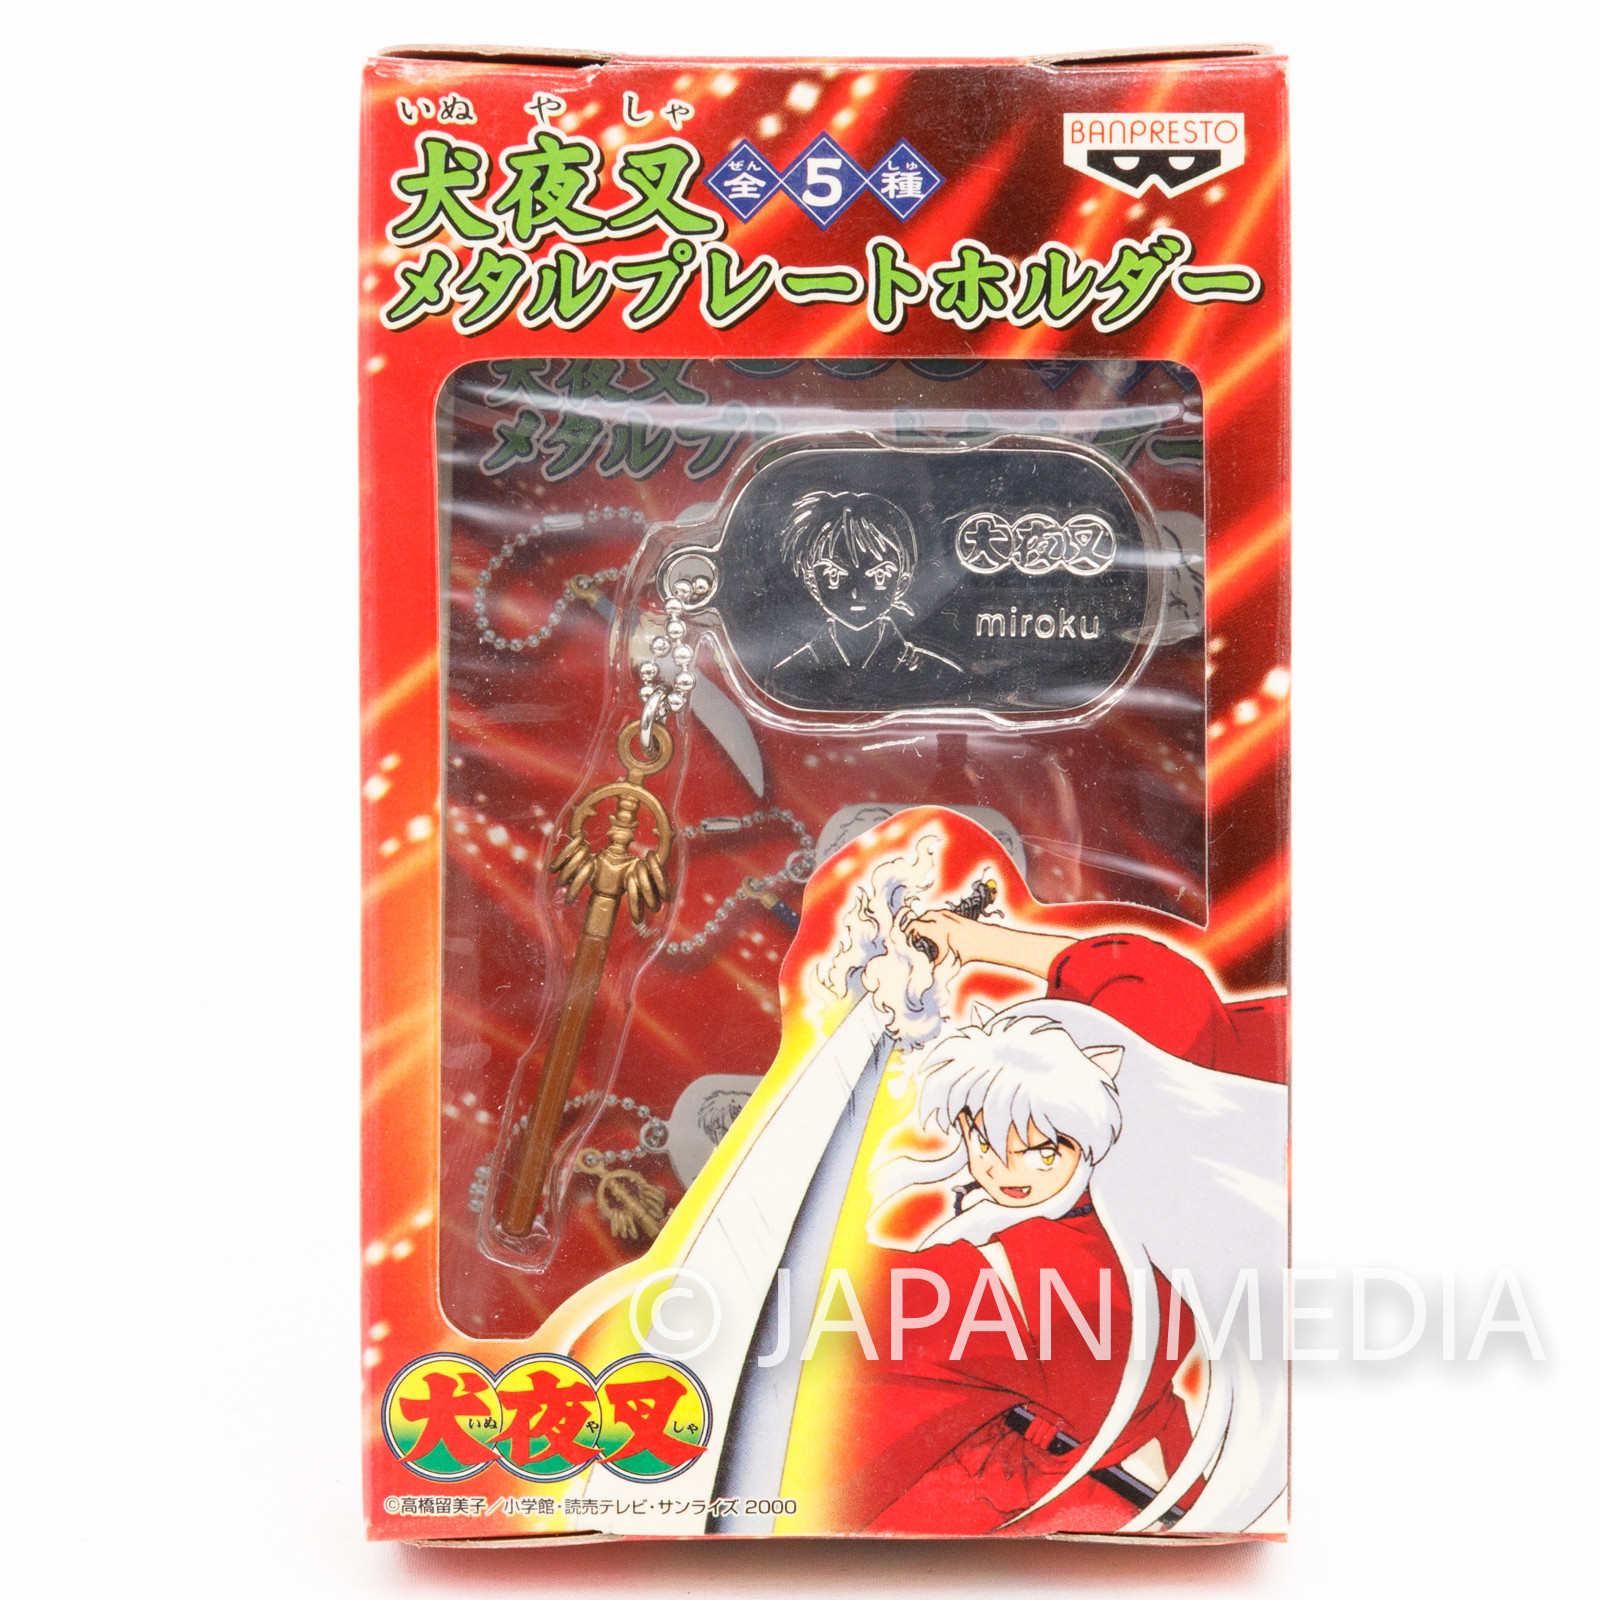 Inuyasha Miroku Metal Plate Mascot Banpresto JAPAN ANIME MANGA